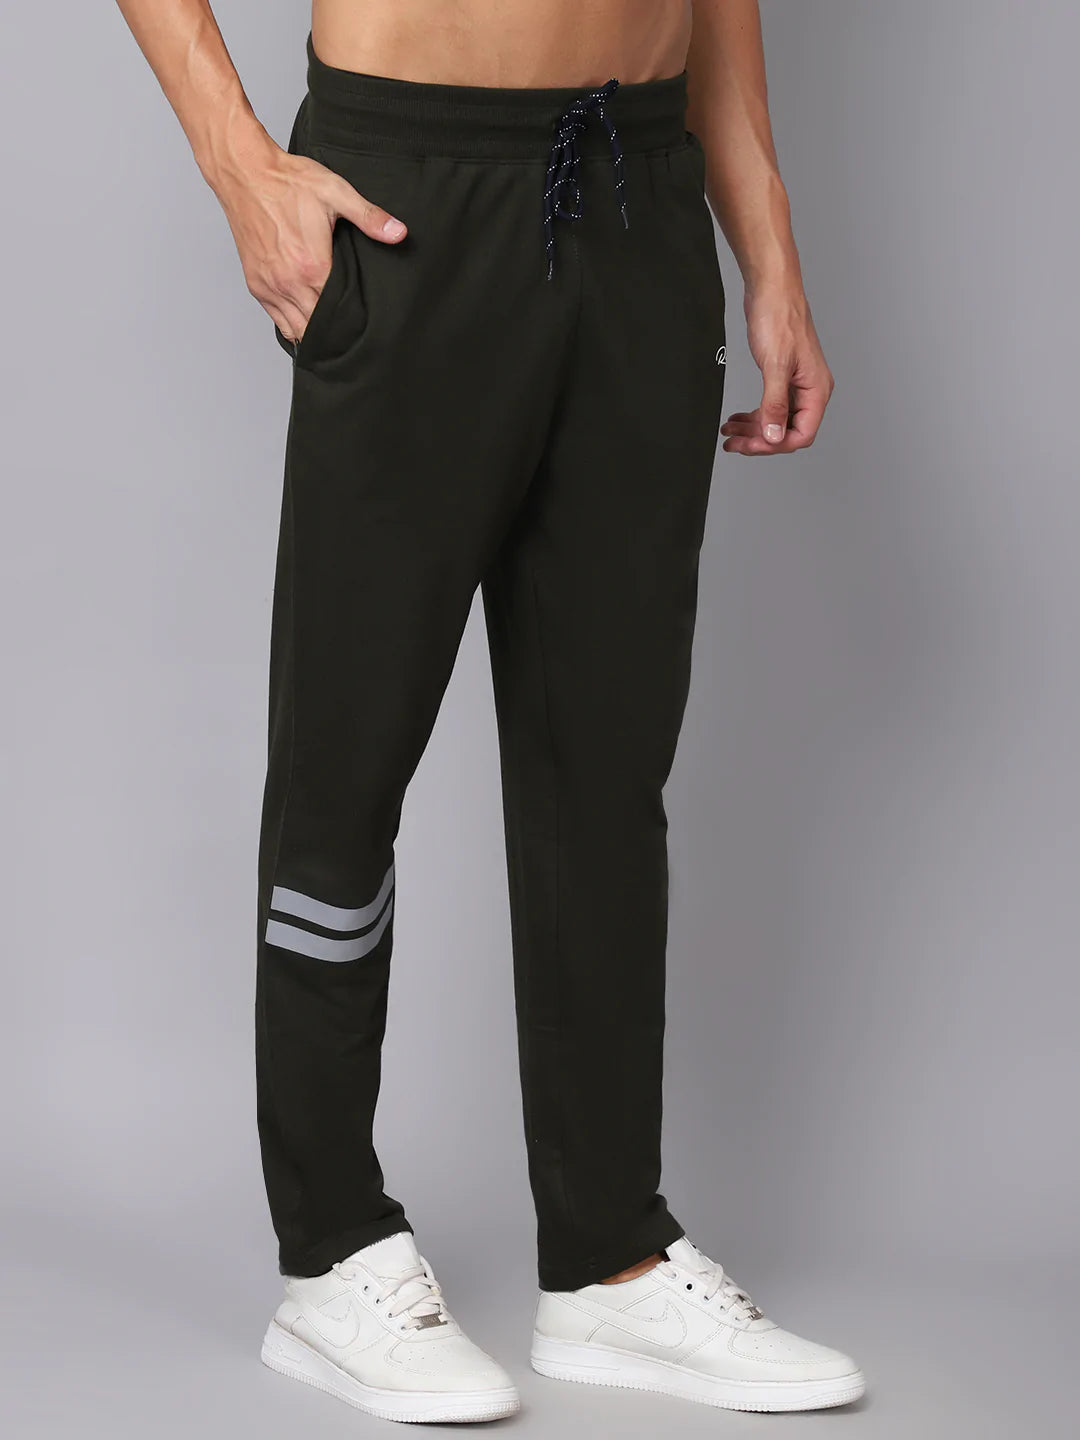 Joggers Park Men's Trackpants - Maroon, Polyester, Regular Fit